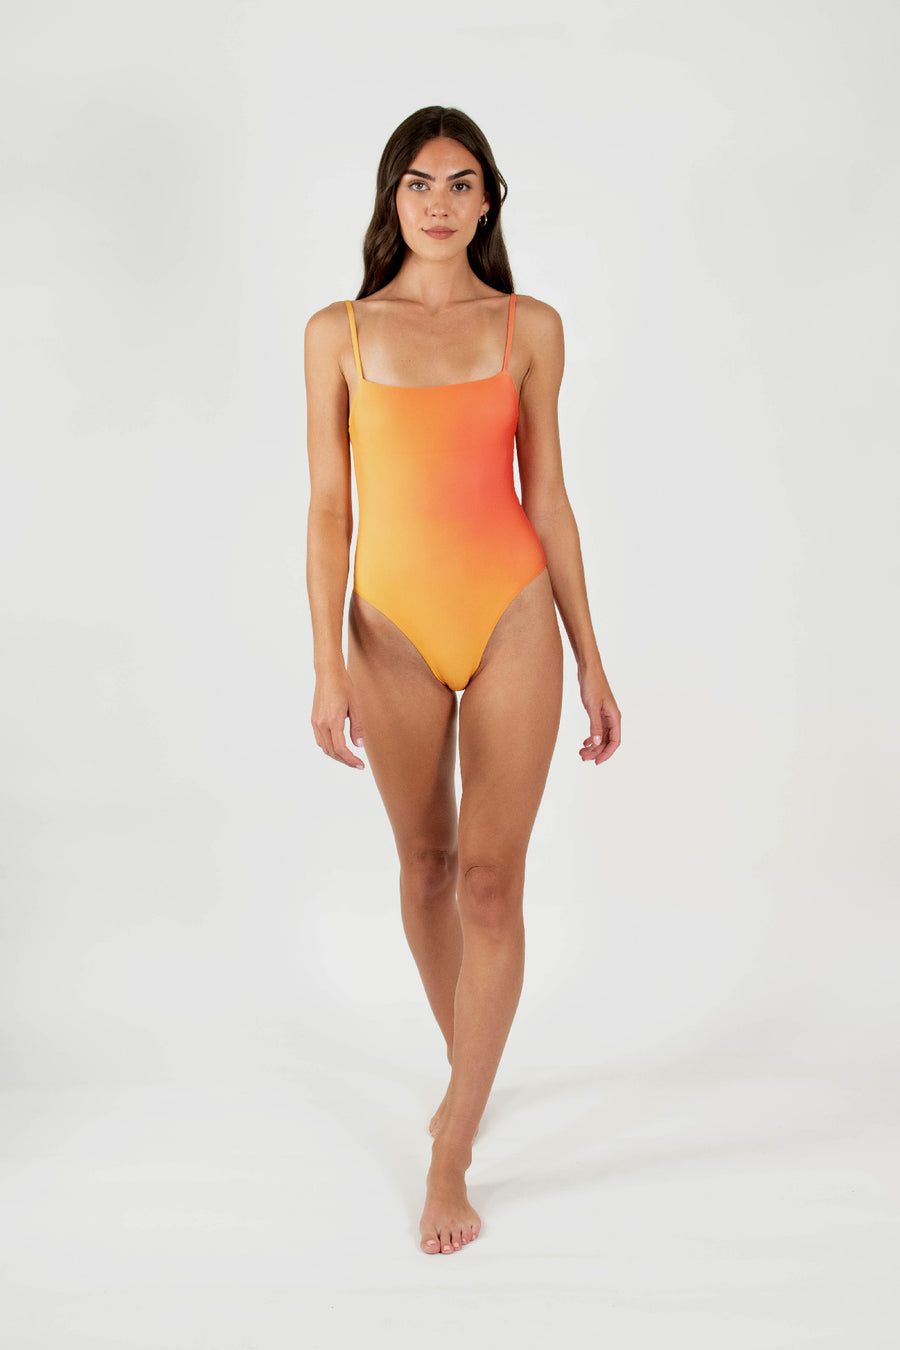 Naranja straight neck One Piece Swimsuit - shopsigal